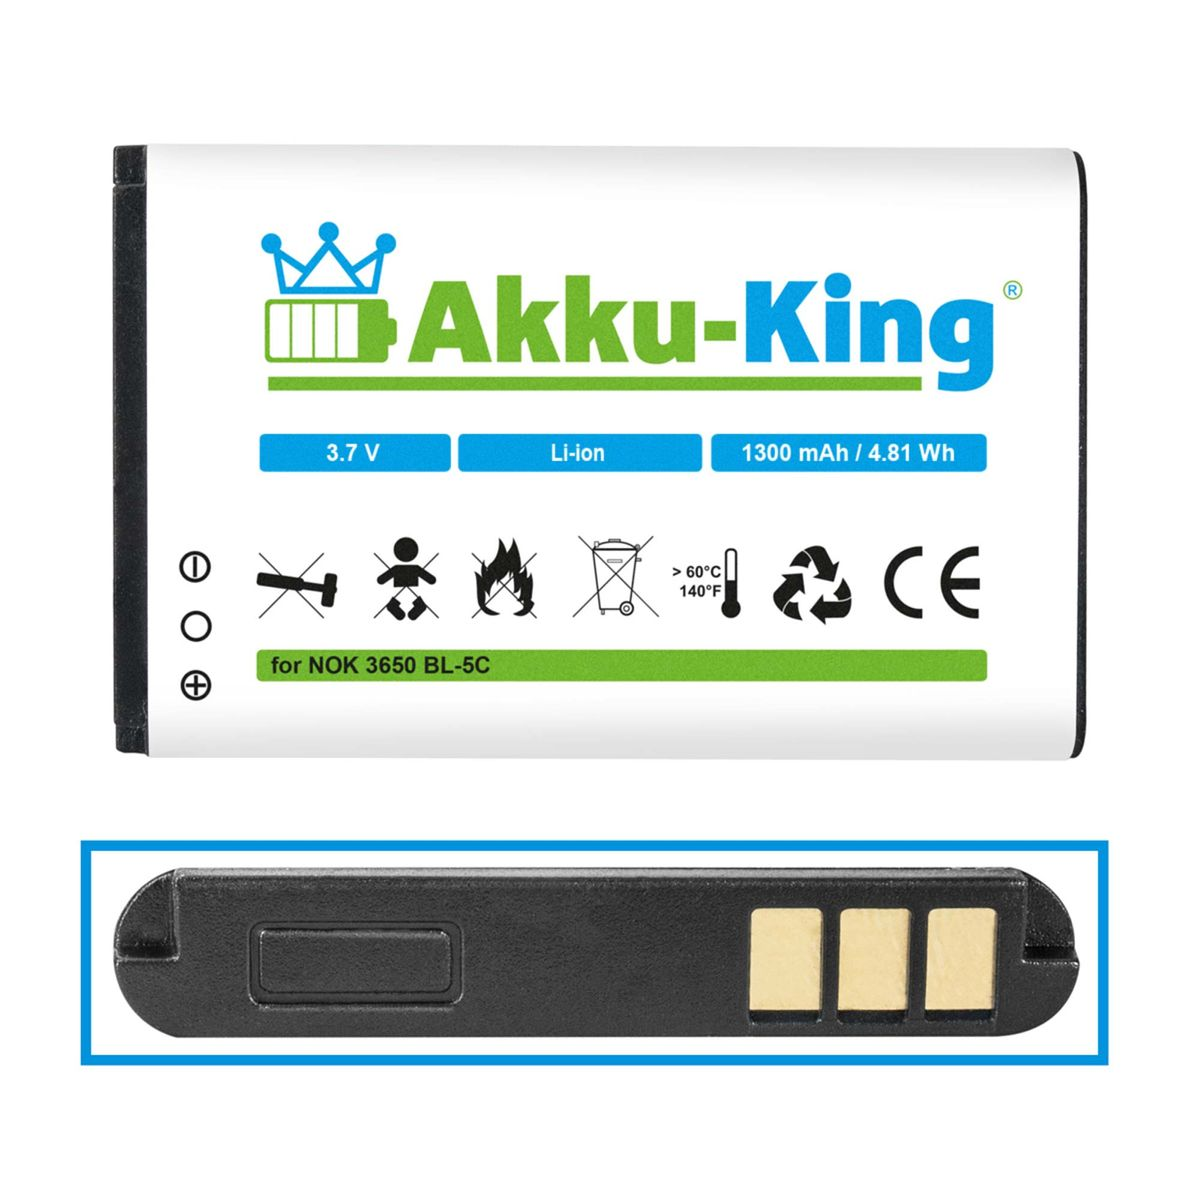 AKKU-KING 3.7 Wiko Volt, Handy-Akku, Akku mit kompatibel Lubi2 Li-Ion 1300mAh